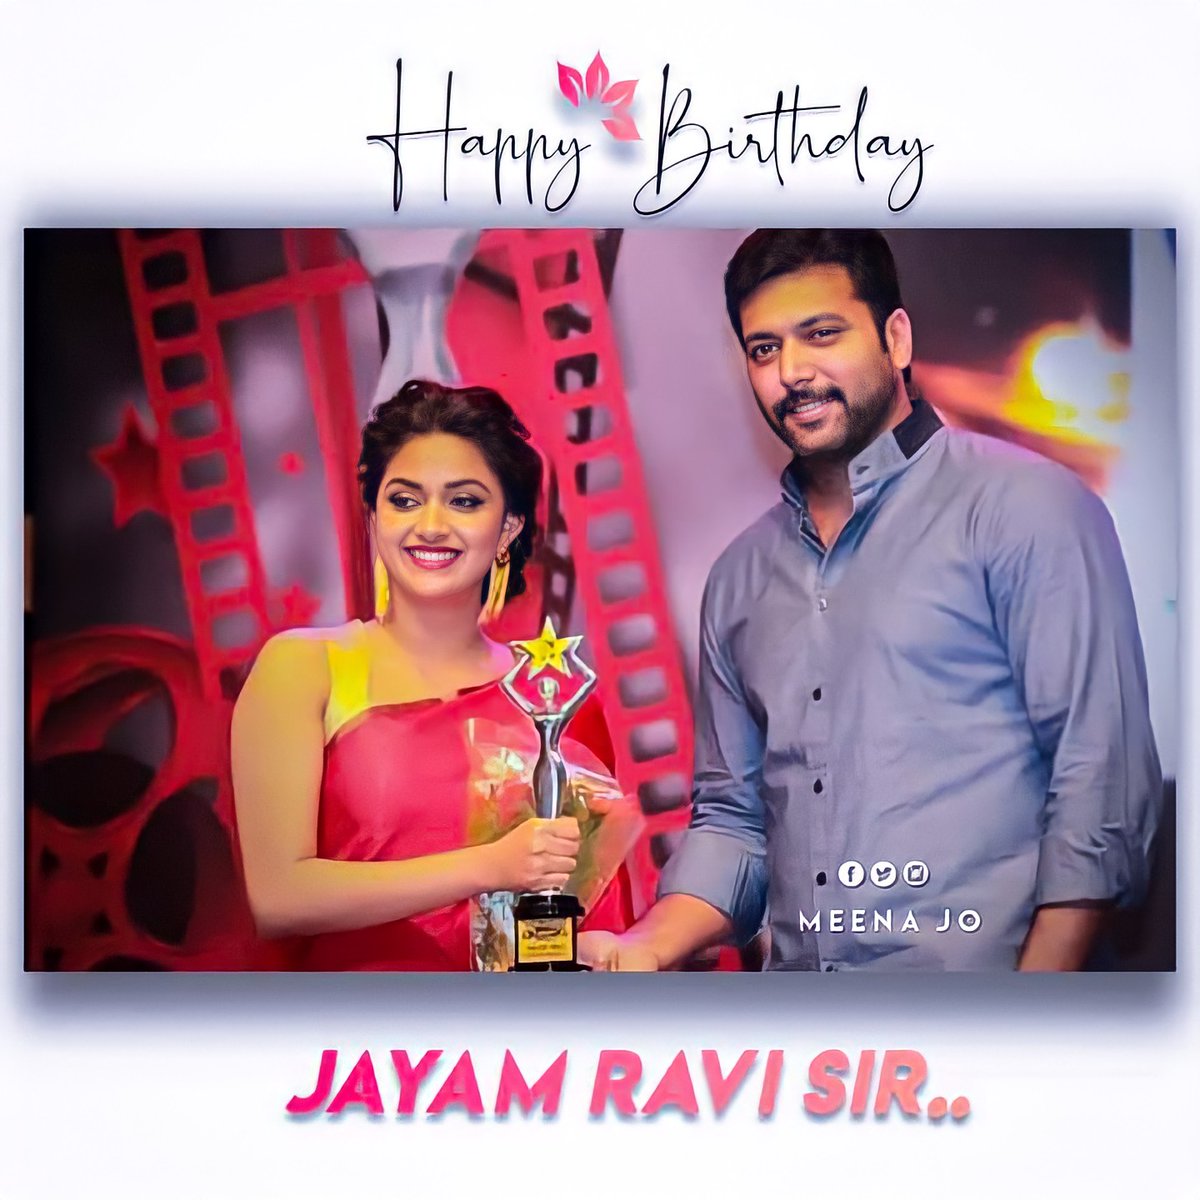 Wish you very happy🎂🎁🎉👑 birthday day @actor_jayamravi sir ❤💐 

#HBDJayamRavi sir 💐#HappyBirthdayJayamRavi 
@actorvijay #Beast #Master 
@KeerthyOfficial #KeerthySuresh 
#Meenajo